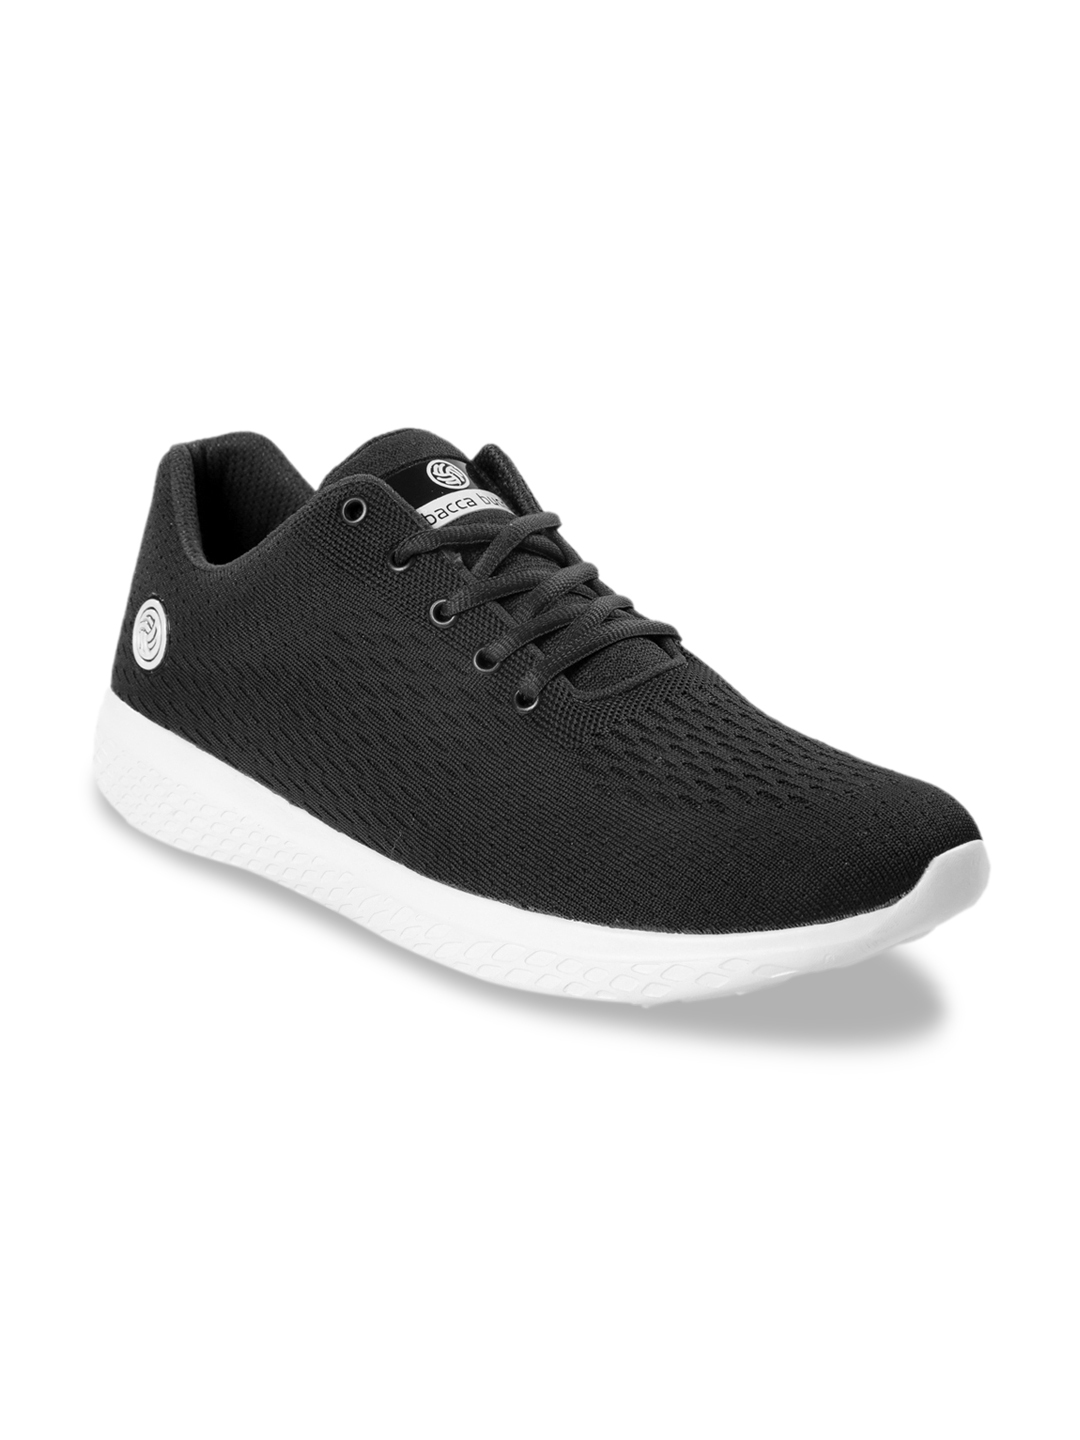 Buy Bacca Bucci Men Black Sneakers - Casual Shoes for Men 9891775 | Myntra